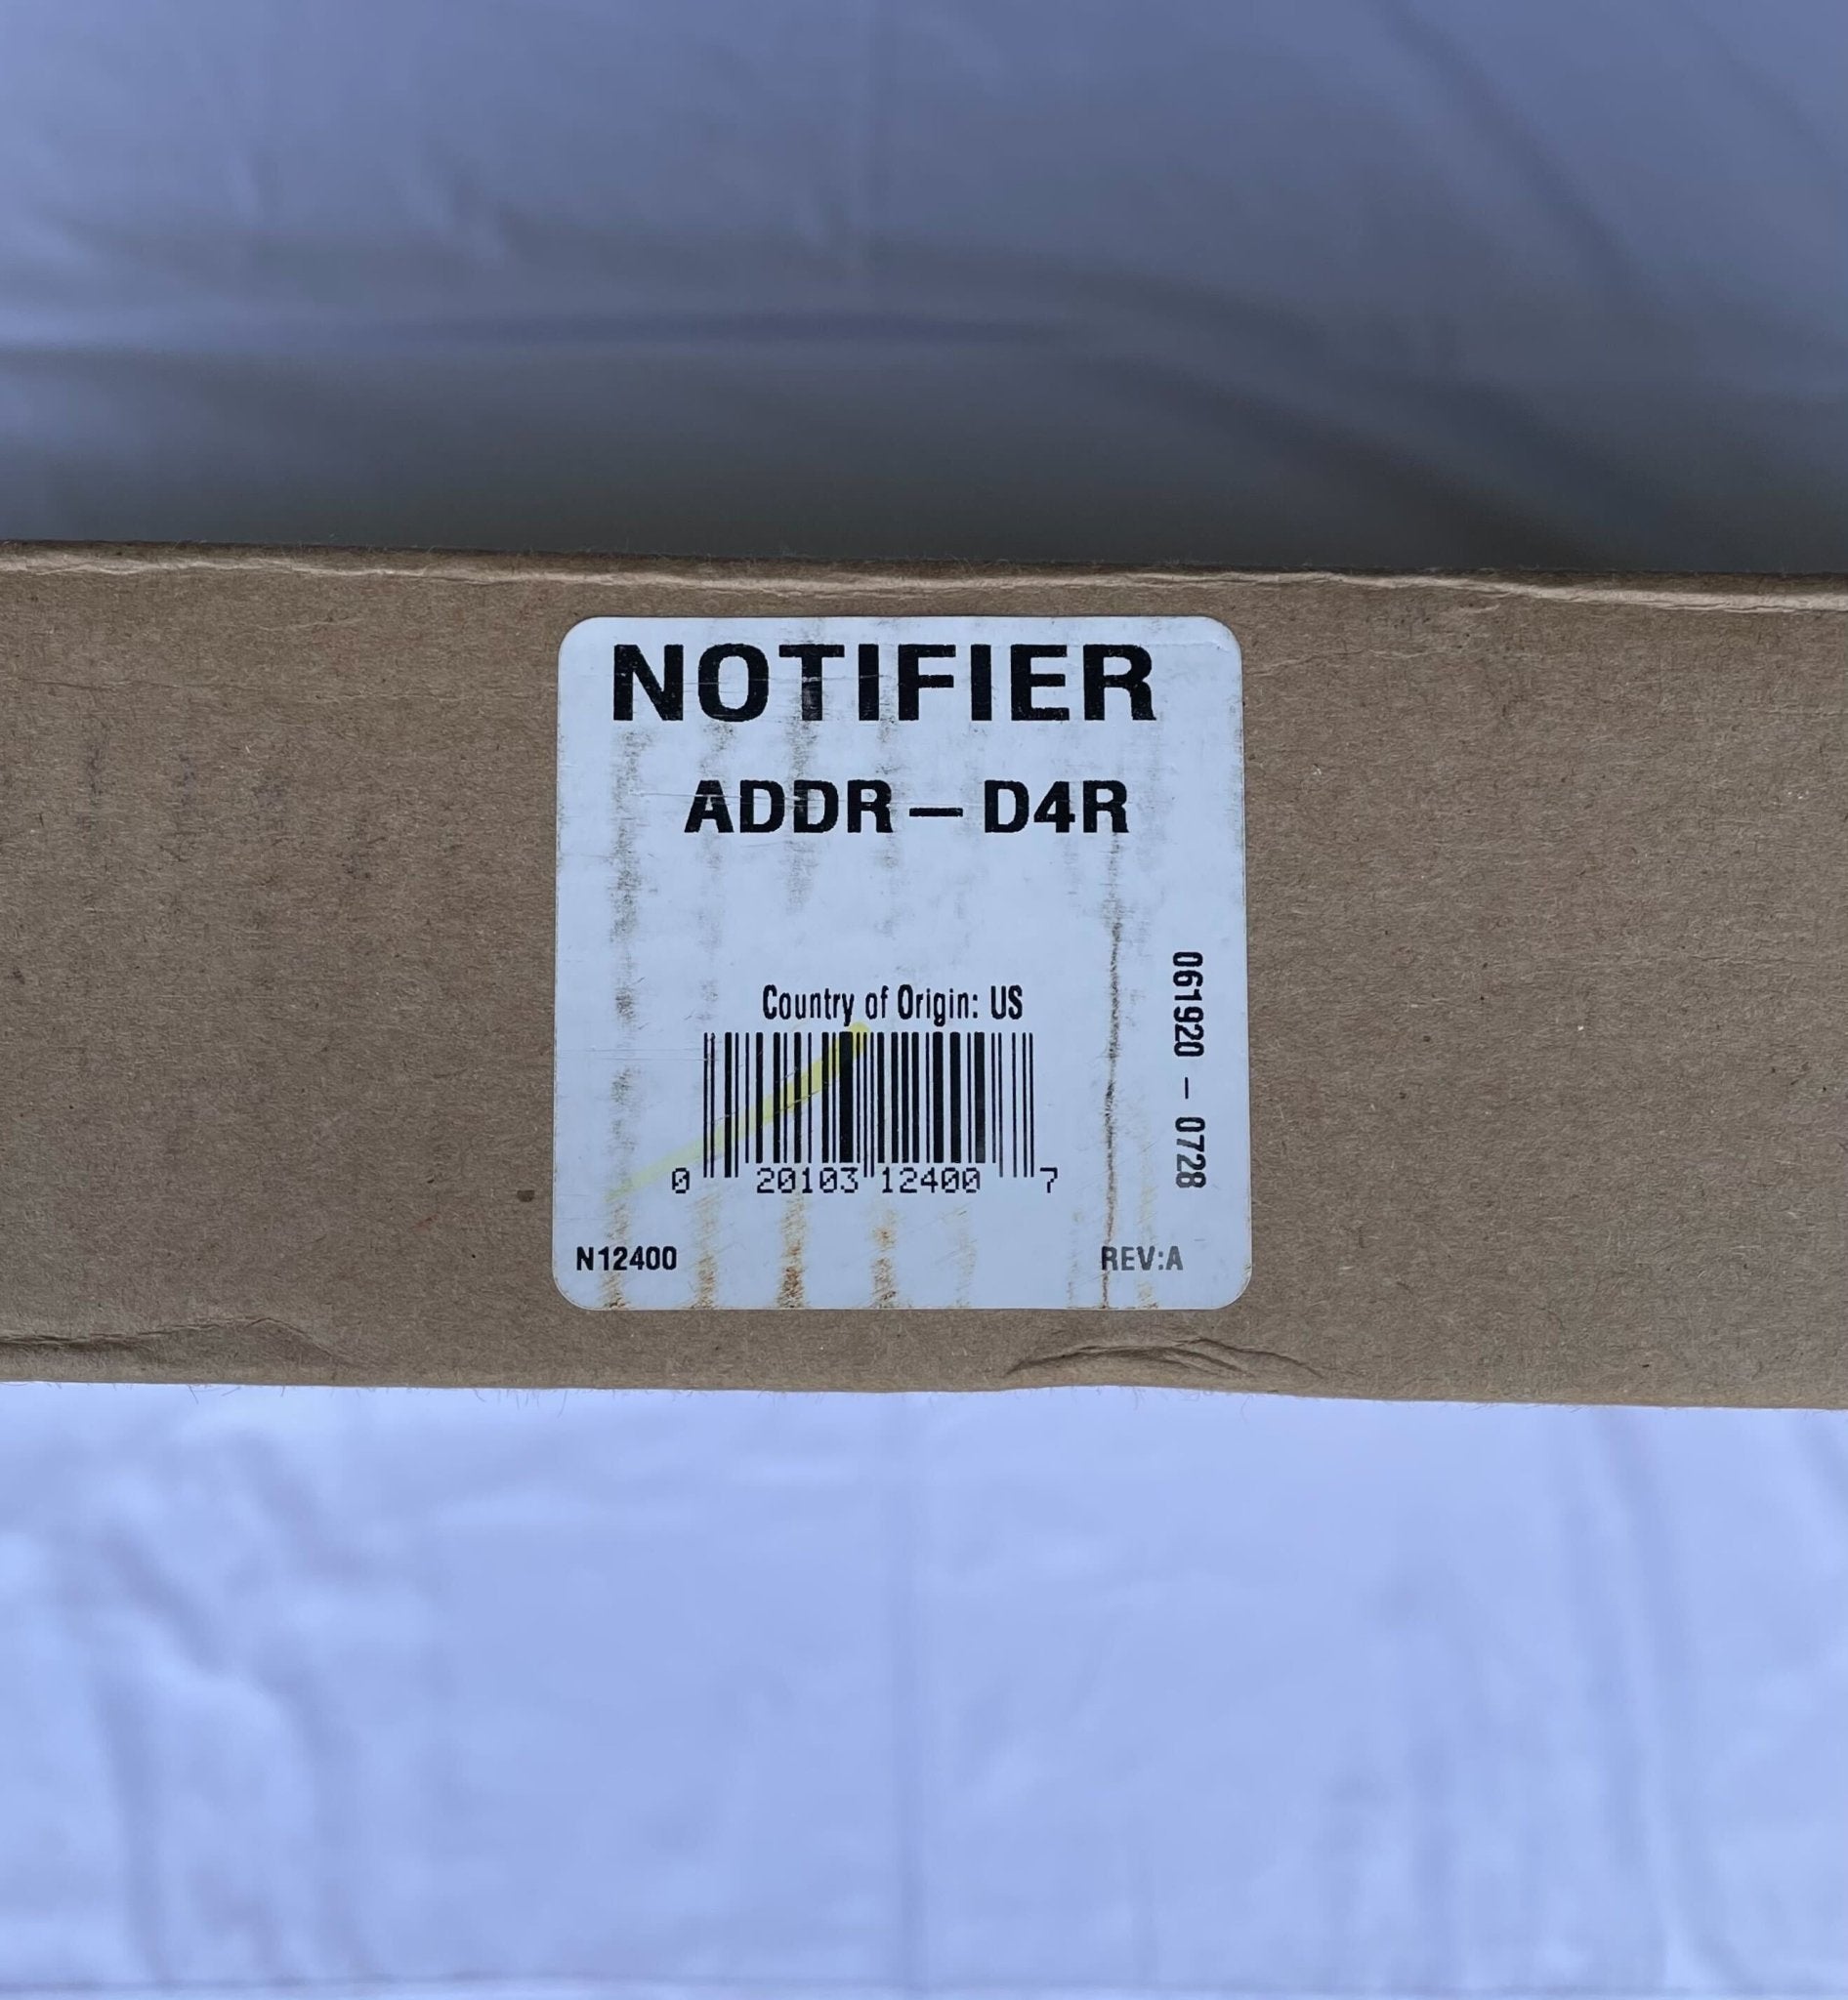 Notifier ADDR-D4R - The Fire Alarm Supplier